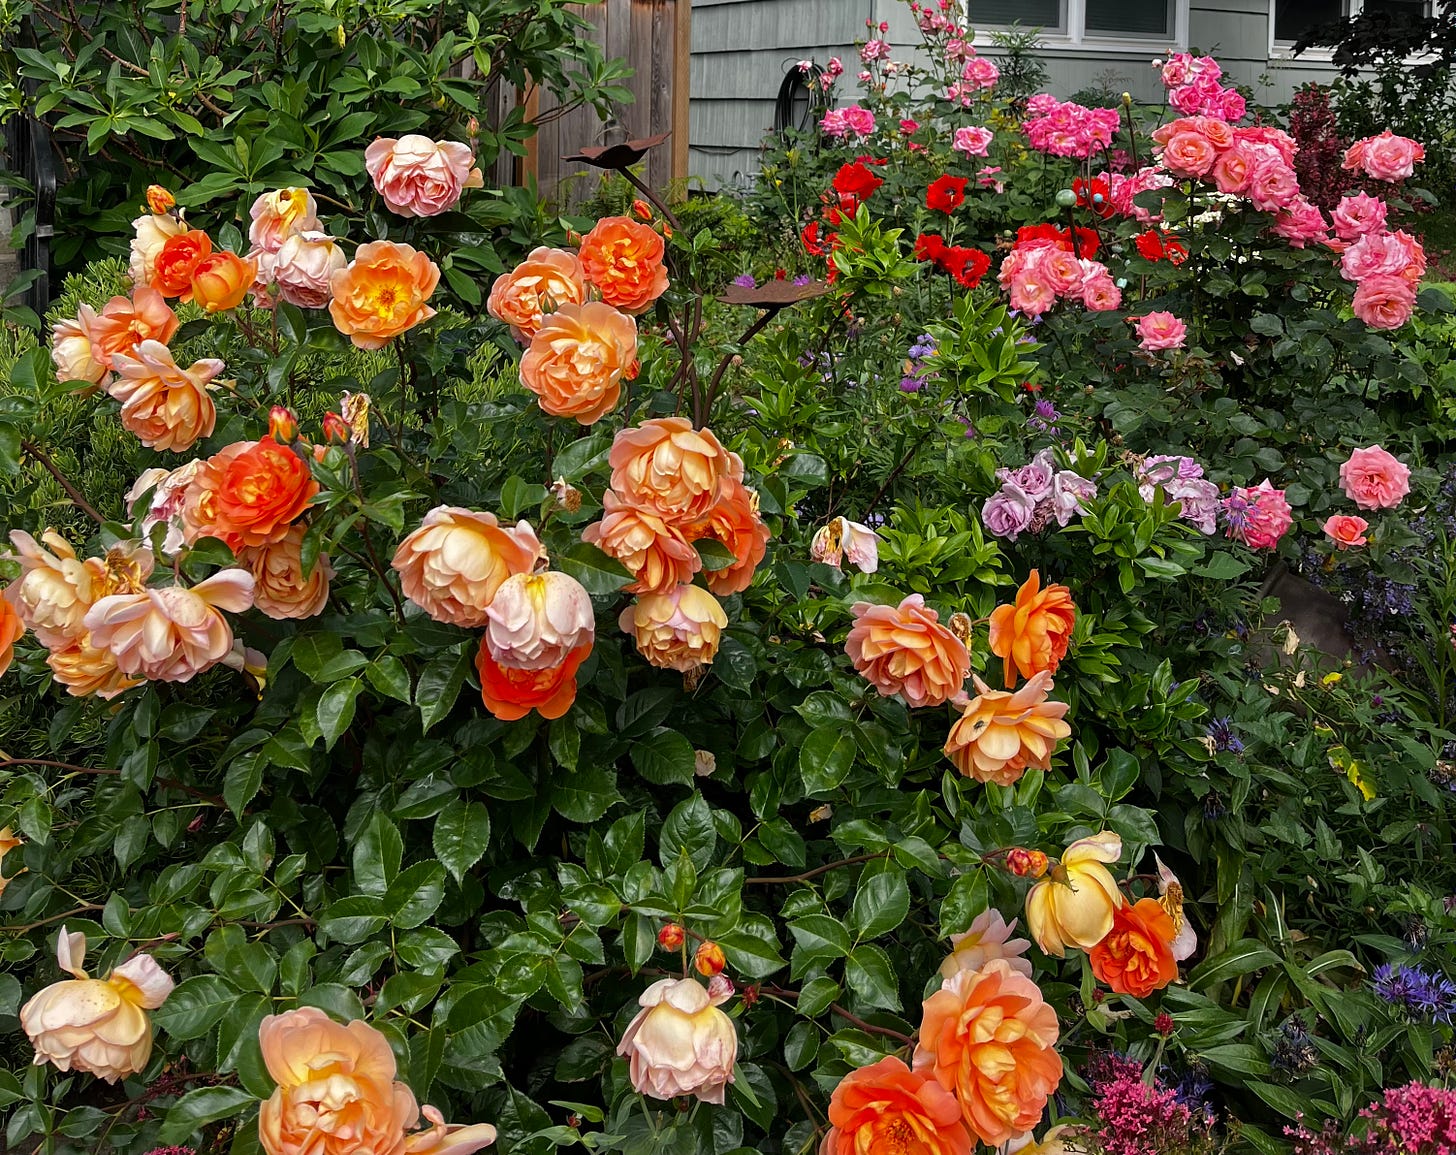 multicolored roses in a garden